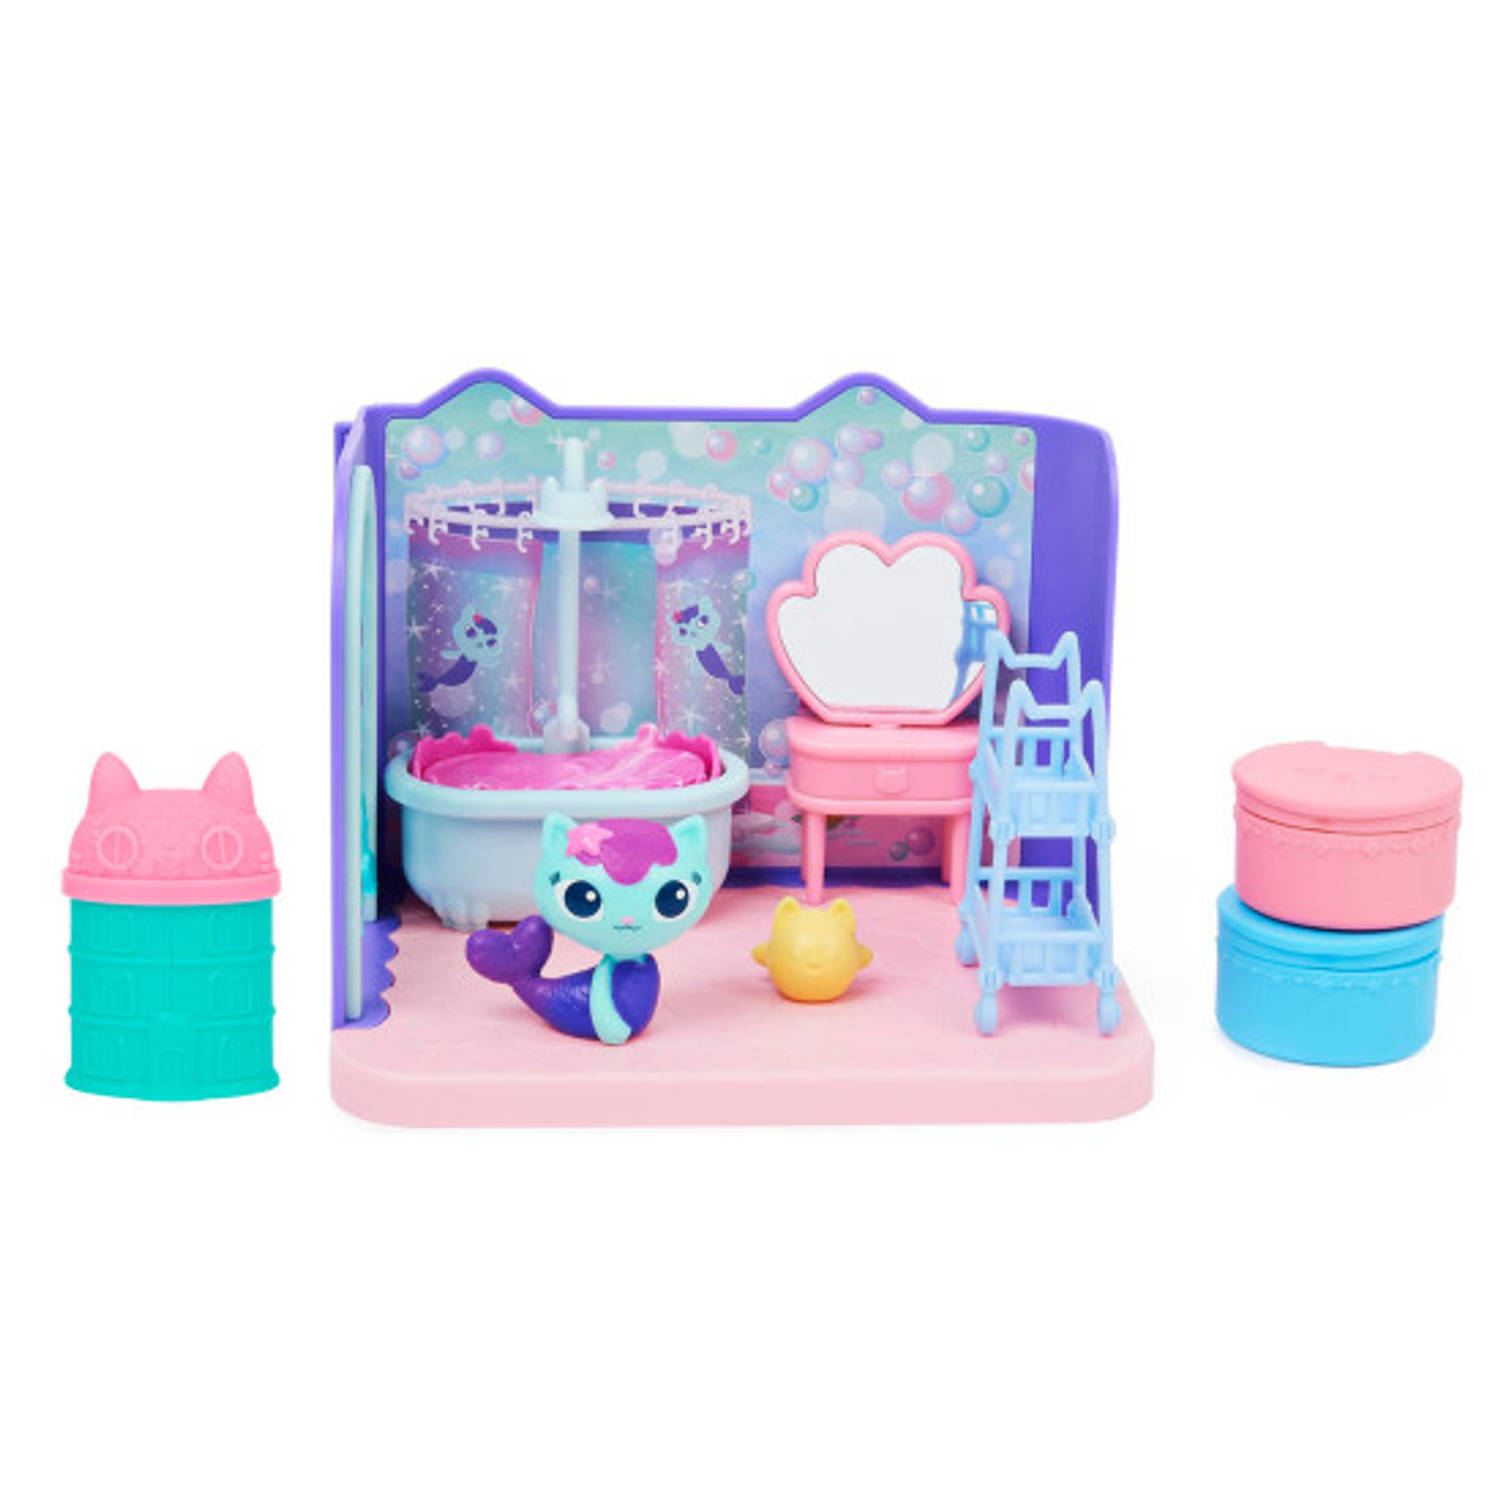 Gabby's Dollhouse - Mercat's Bathroom + Surpise figuur - Speelset en Minipop - Voordeelpakket